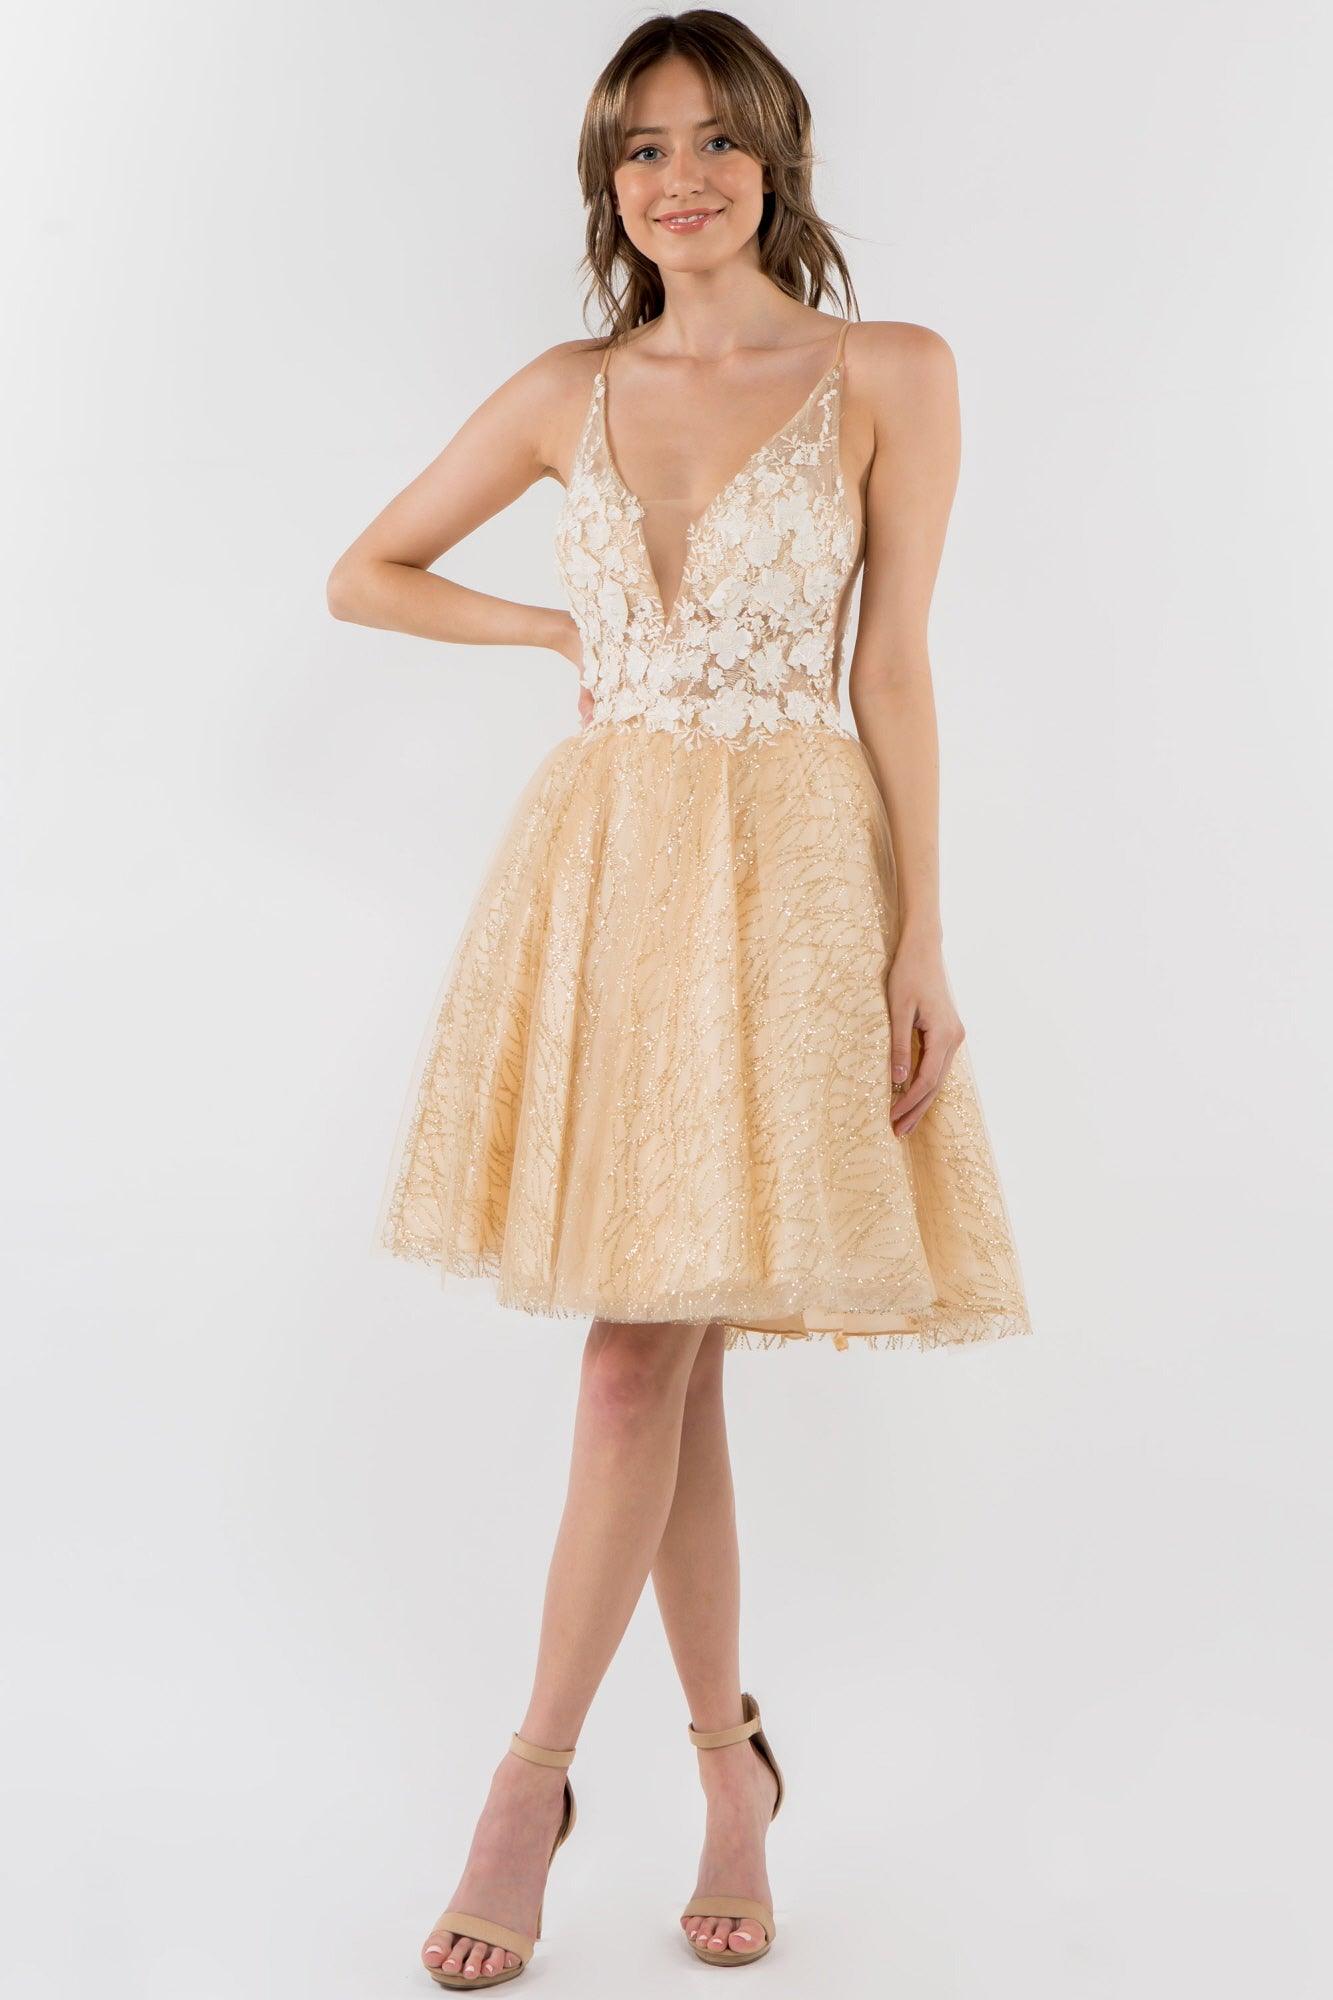 3D Floral Applique Short Homecoming Dress - The Dress Outlet